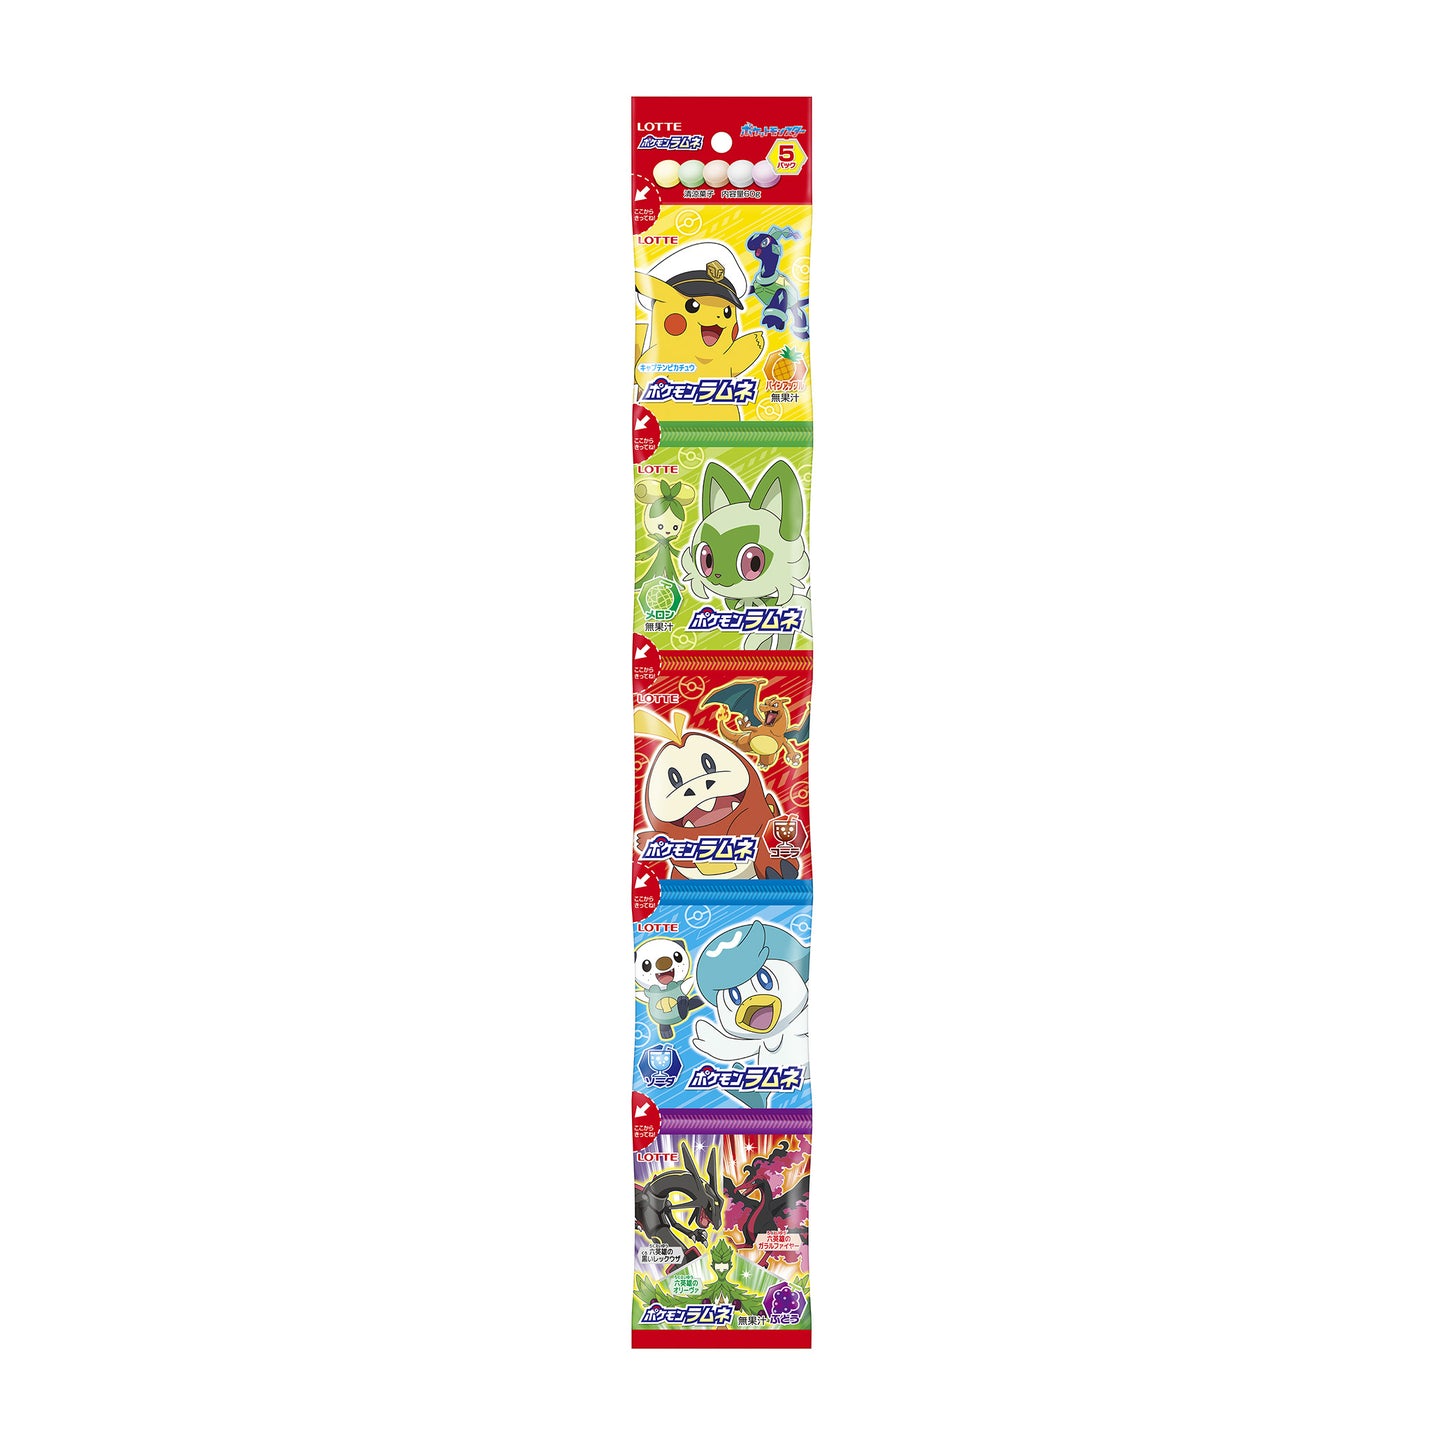 Pokémon Pikachu Ramune Candy - 5 mini packs